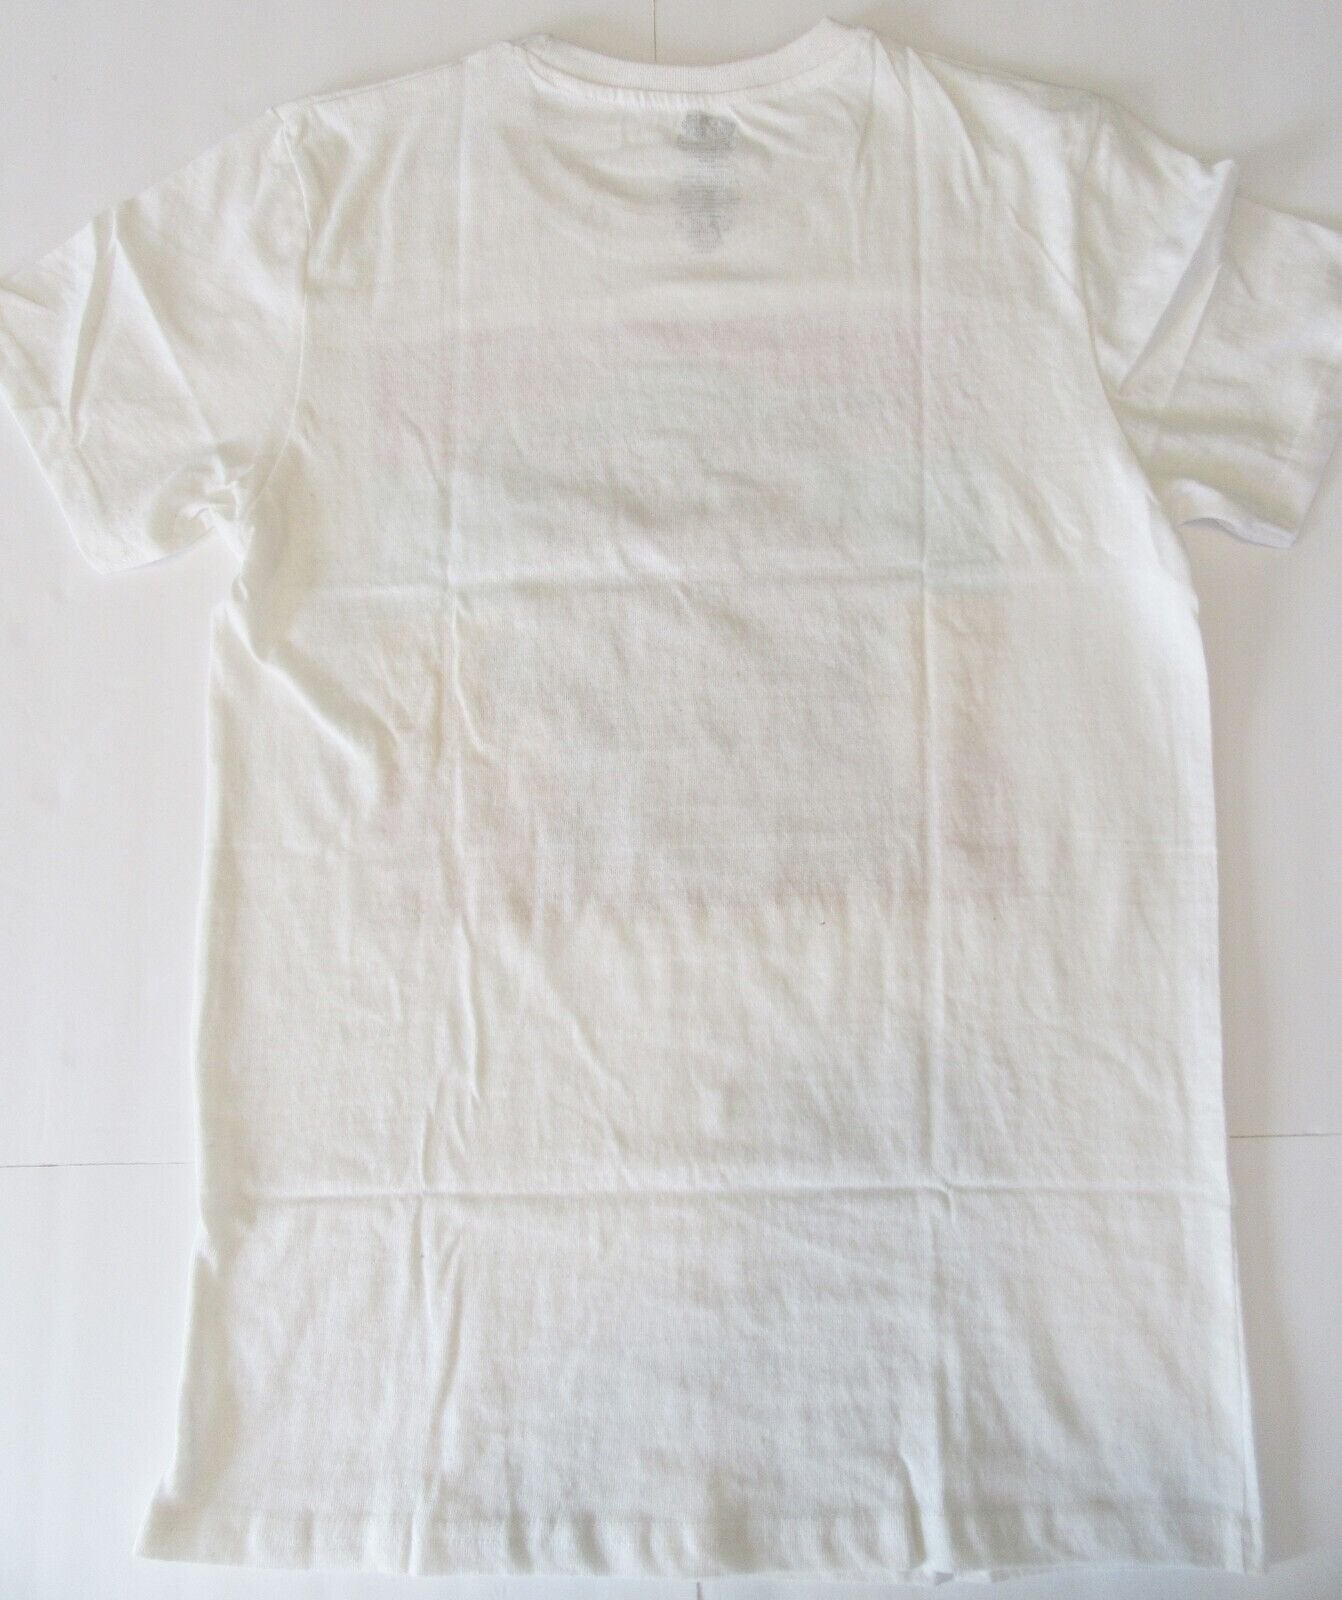 Grogu ~ Baby Yoda Star Wars Medium T-Shirt ~ Size M ~ White T Shirt